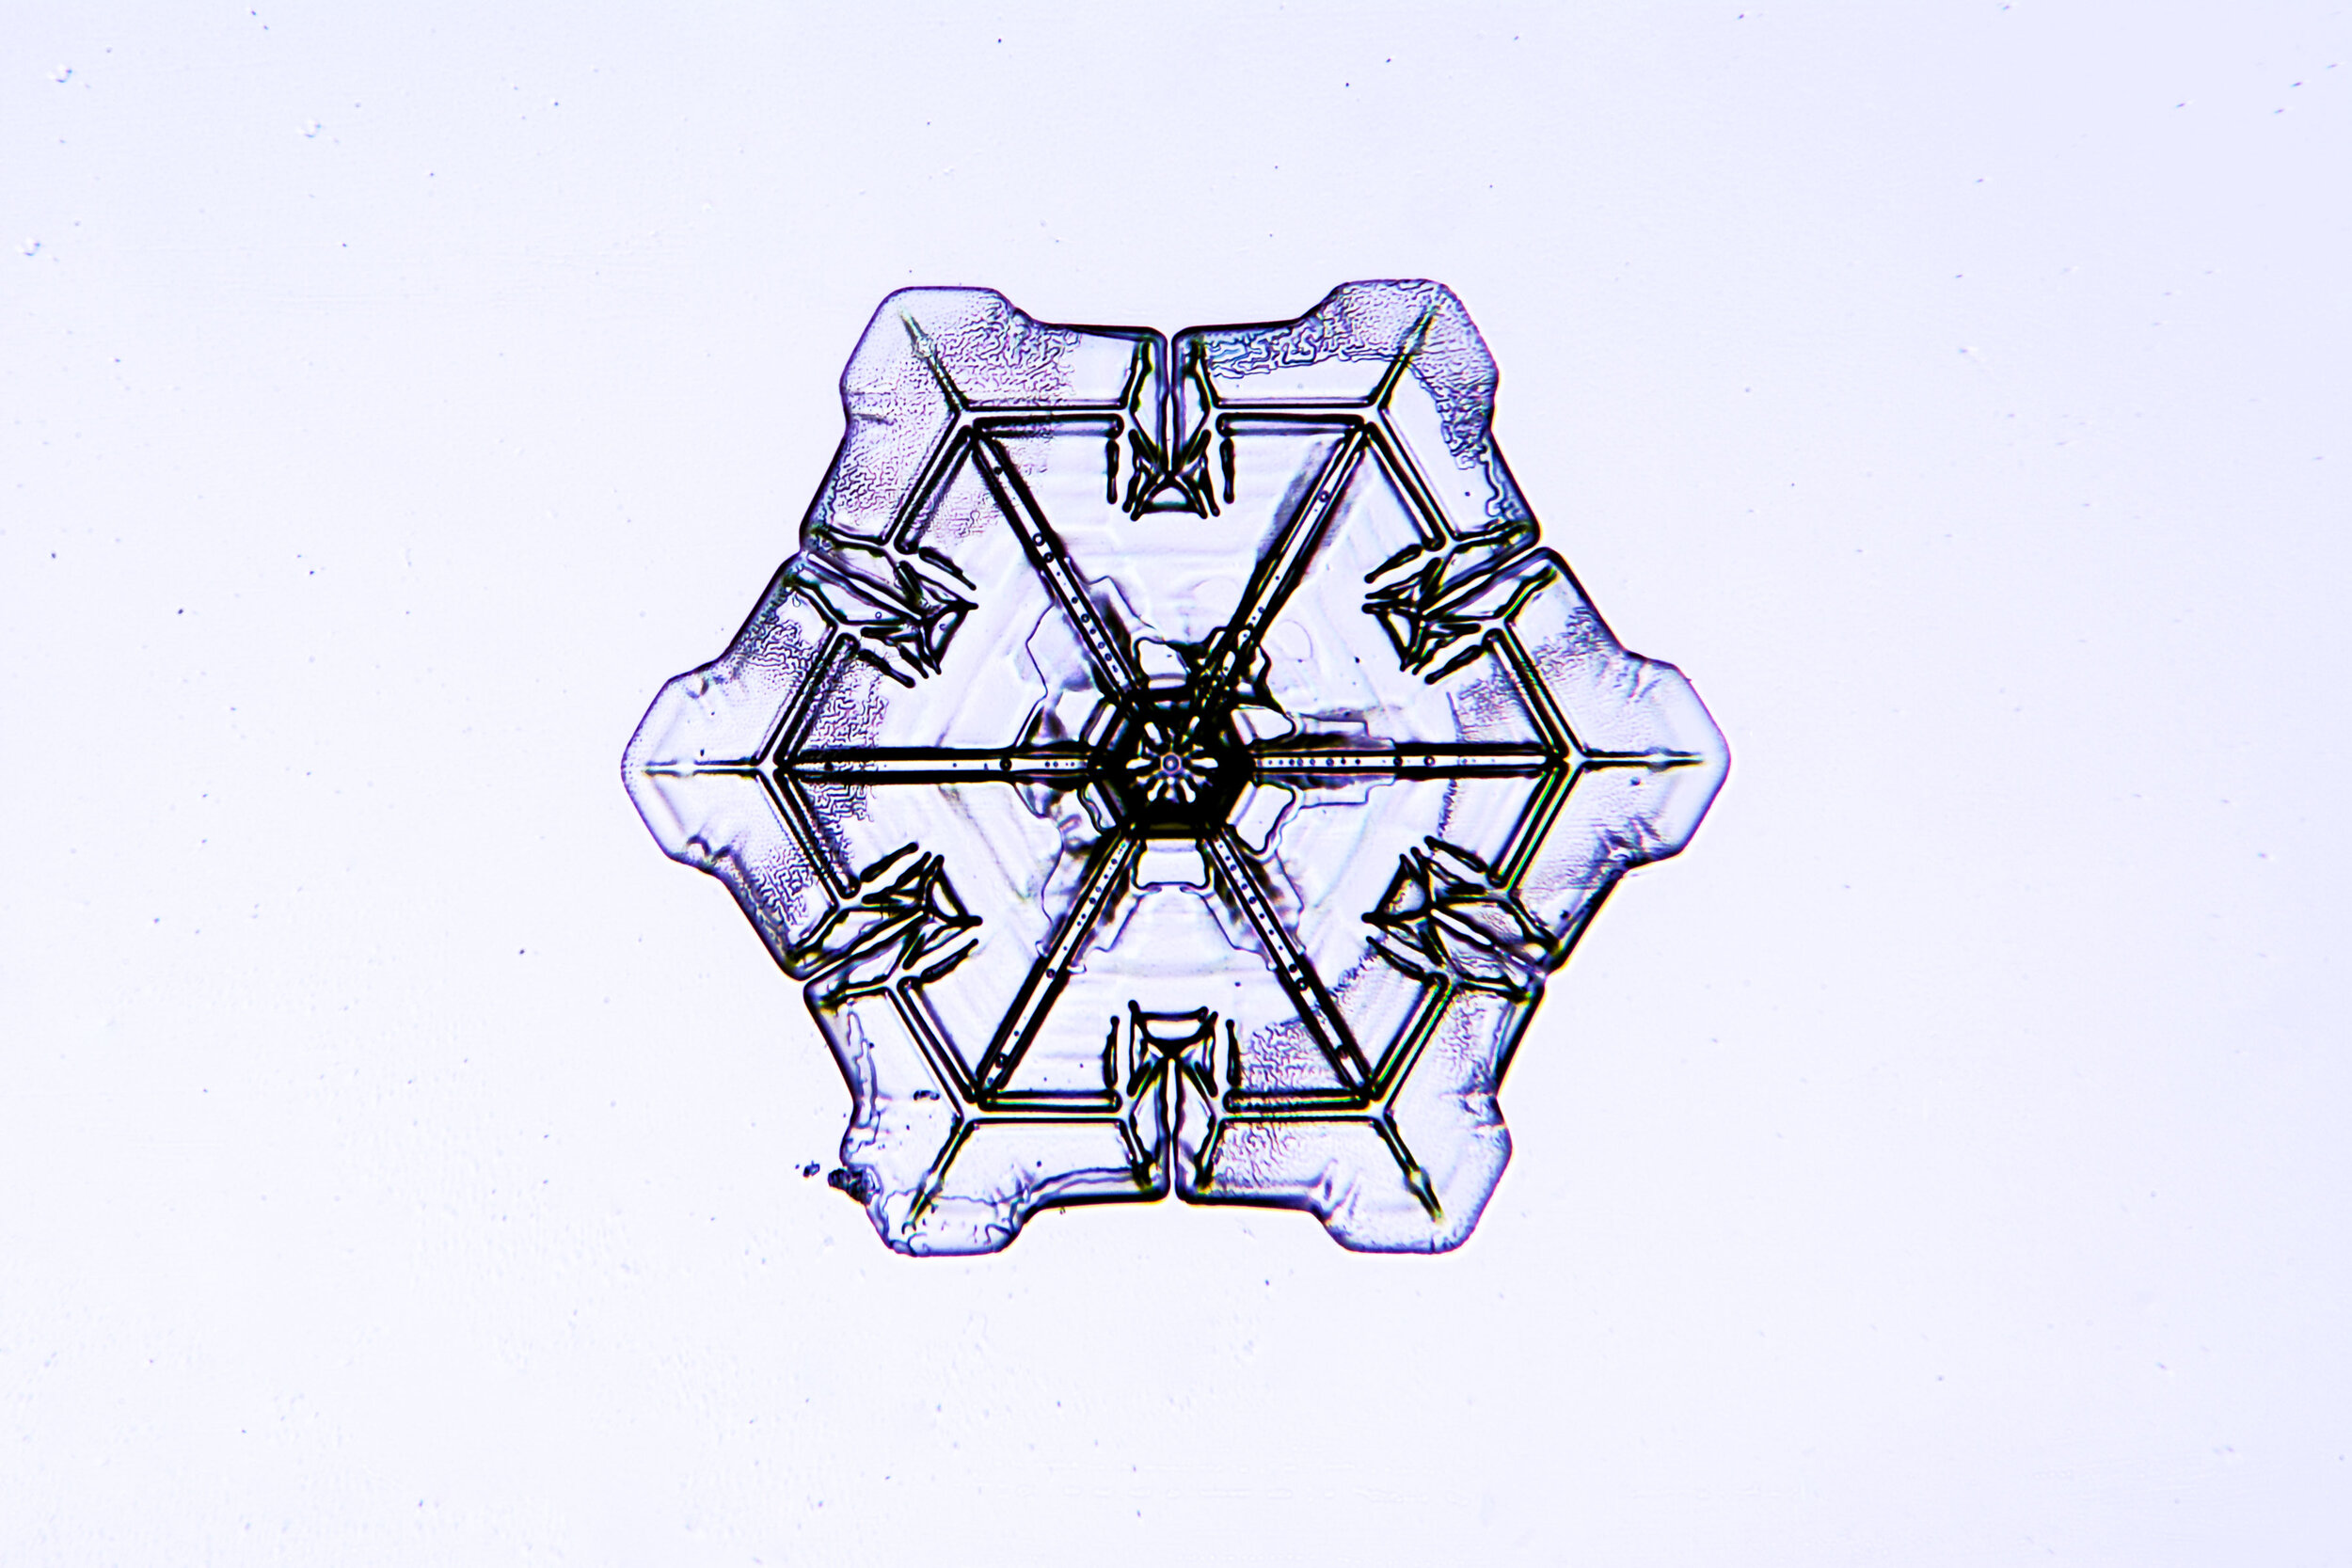 Gary-Mawe-Stellar-Plate-Snowflake-13.jpg